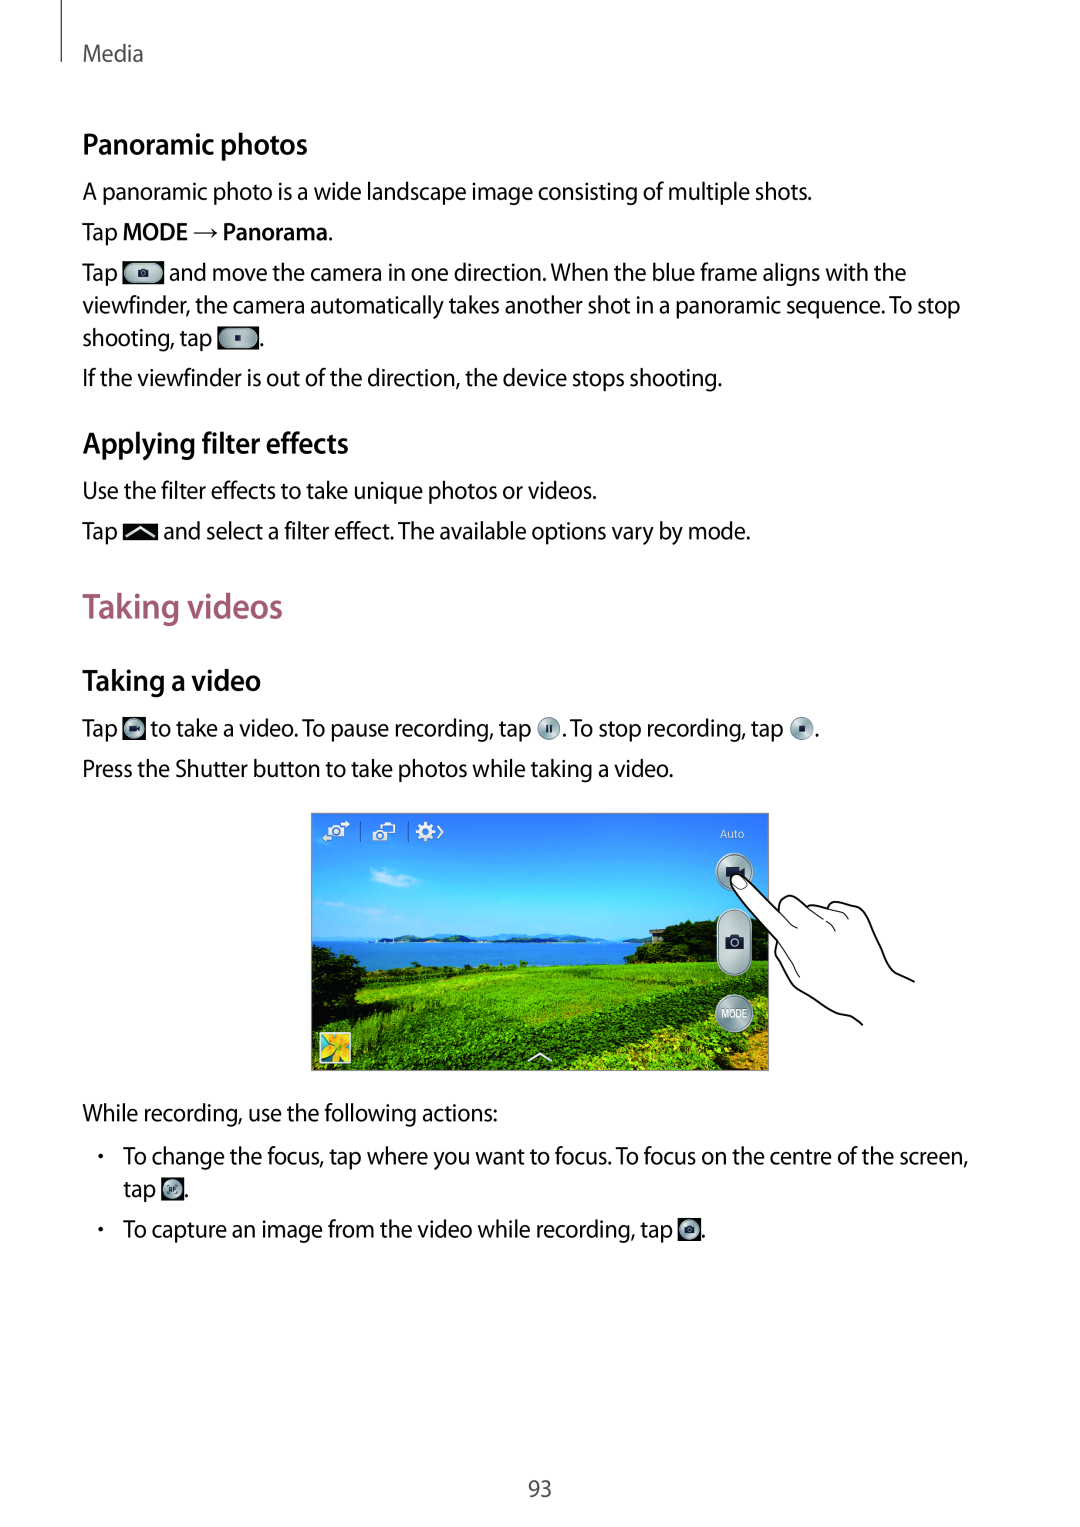 Samsung SM-N9005BDEEGY Taking videos, Panoramic photos, Applying filter effects, Taking a video, Tap MODE →Panorama, Media 